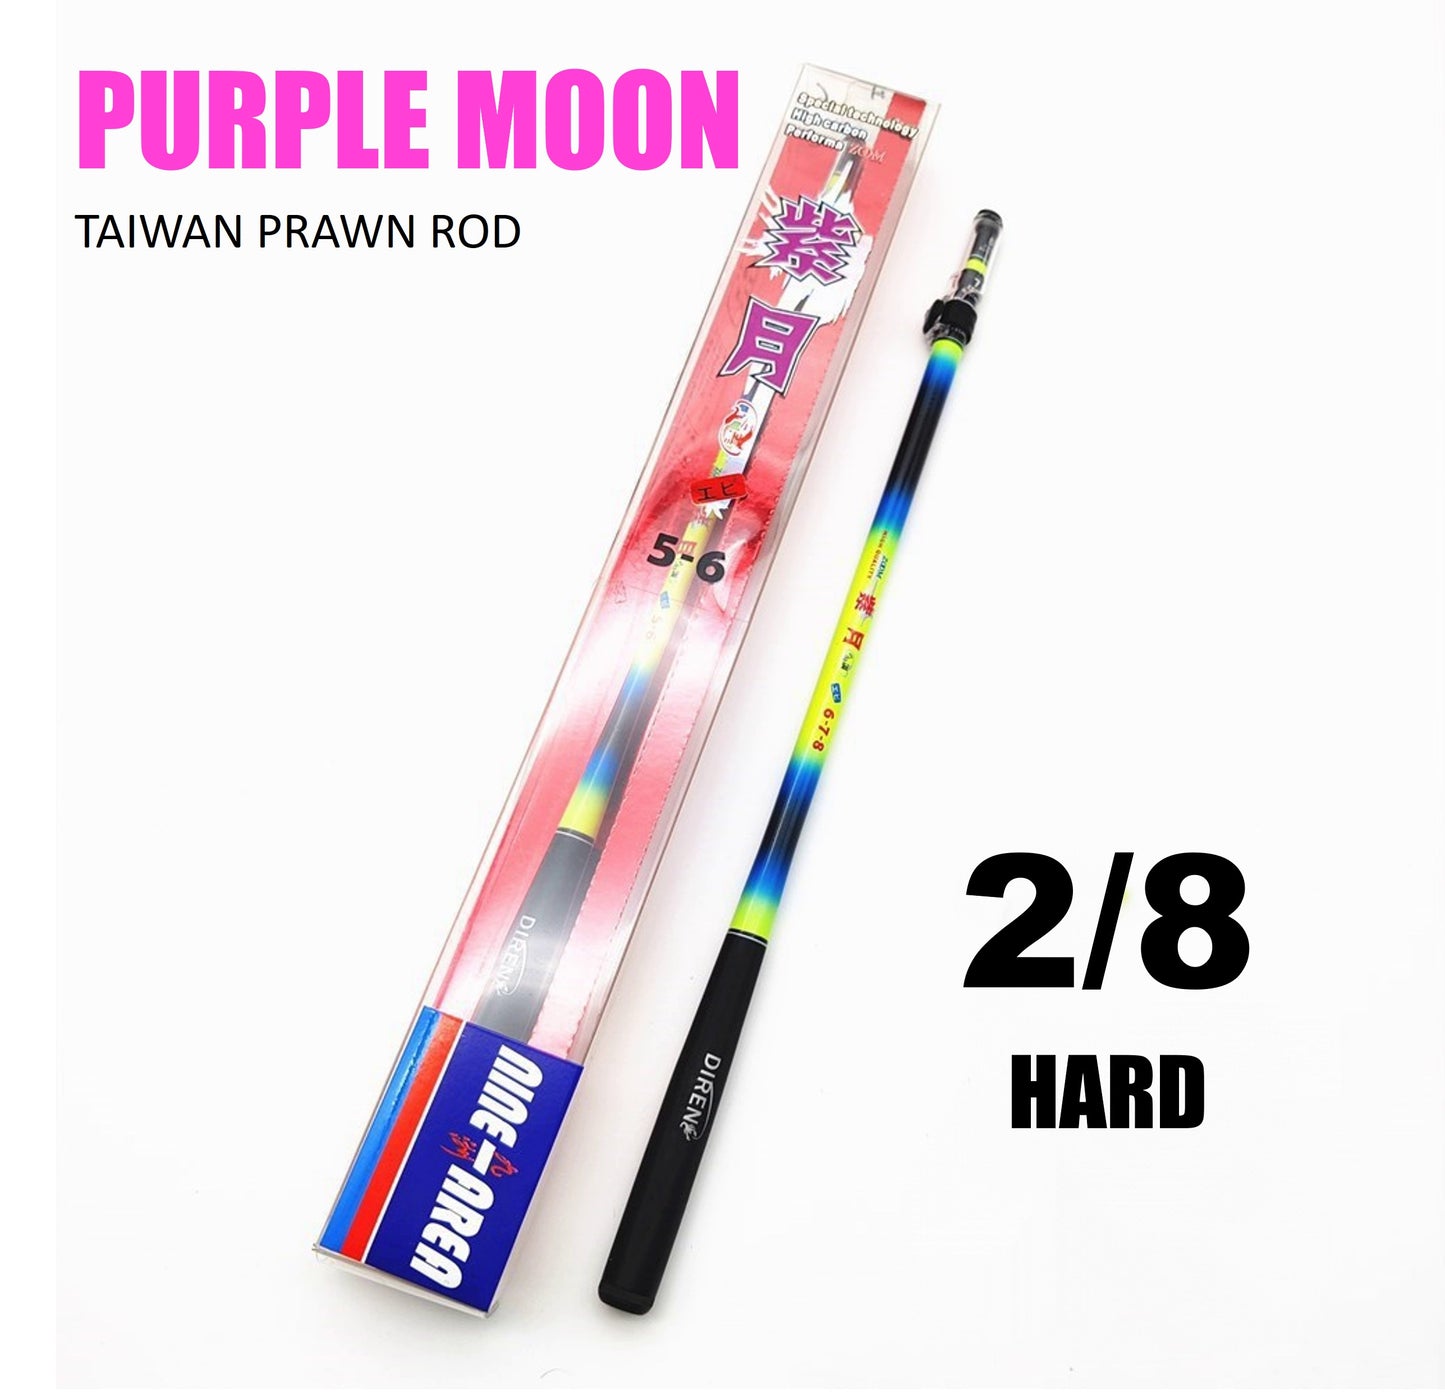 Purple Moon Prawn rod PR029